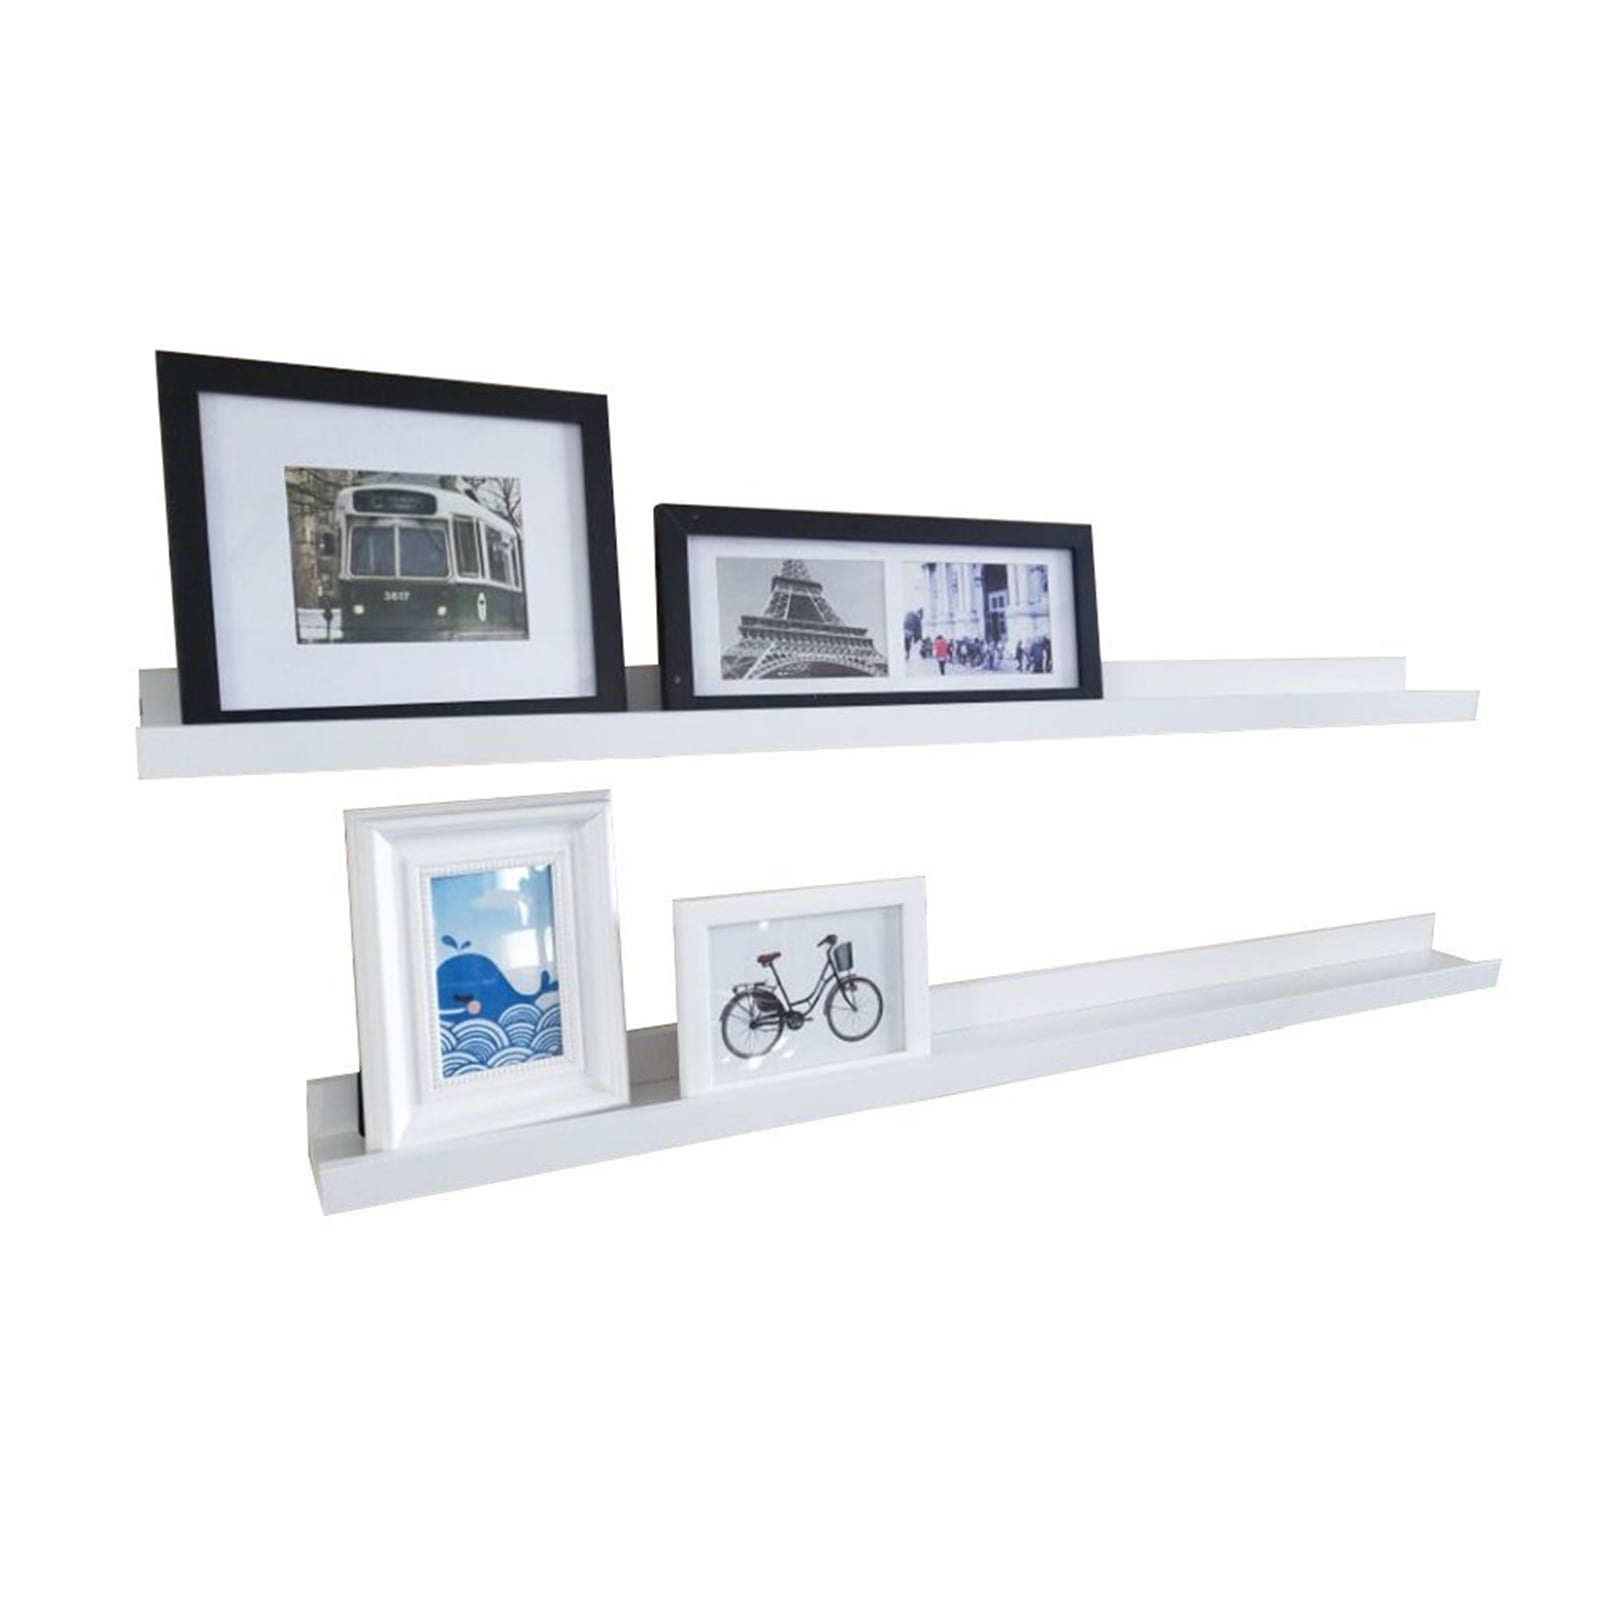 46" Photo Display Ledge Shelf Floating Shelves Wall Mounted Home Decor White New 